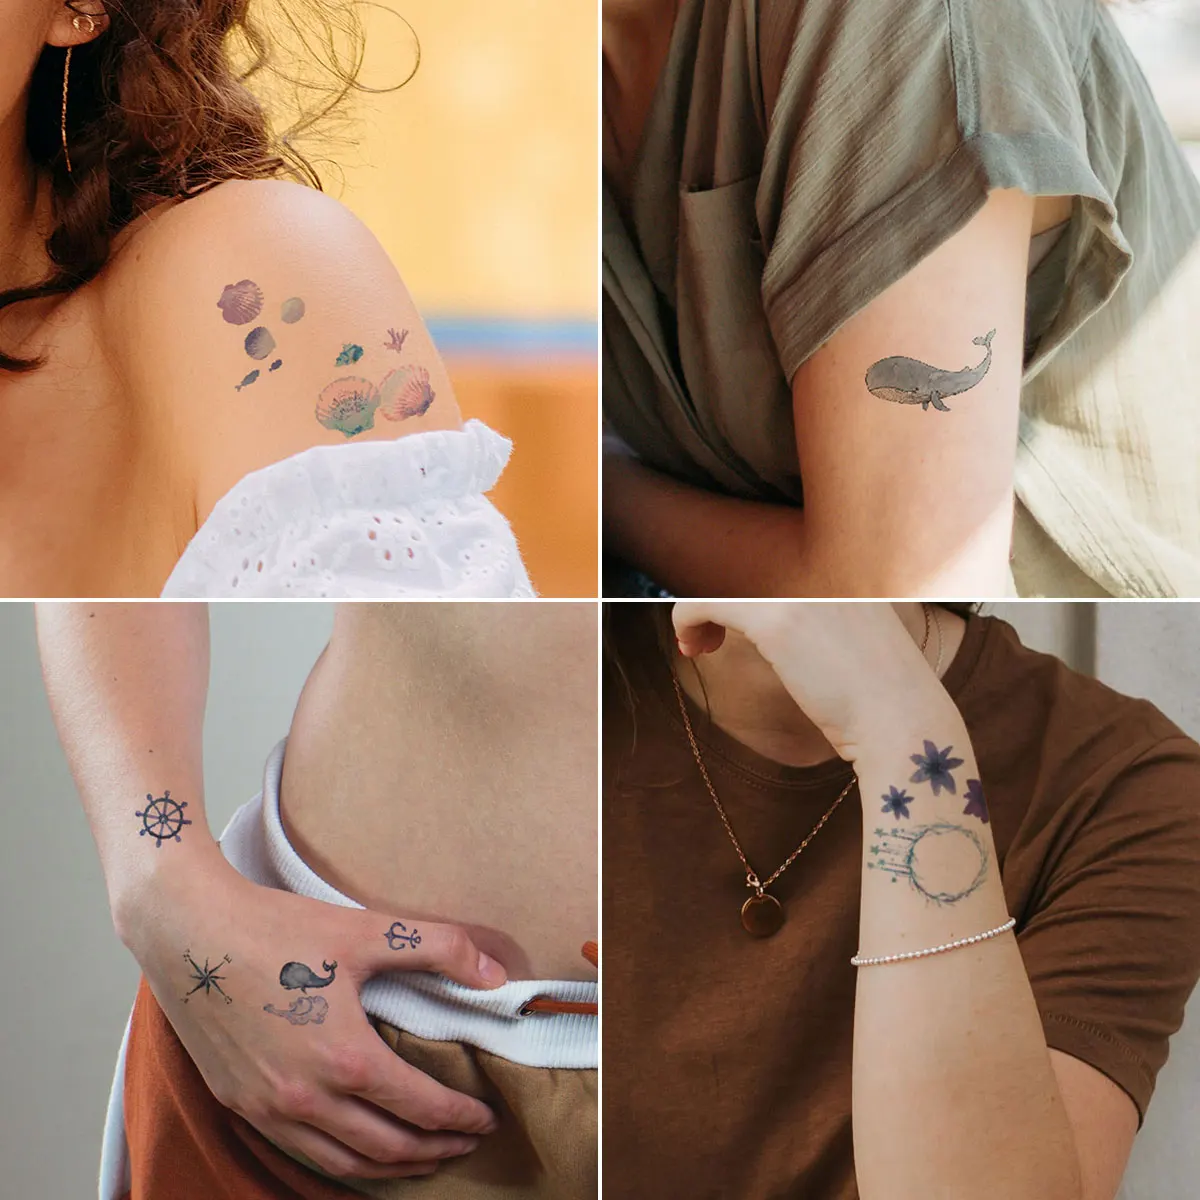 30 Sheets Temporary Tattoo Stickers,Small Cute Stylish Pattern For Women,Body Finger Wrist Shoulder Arm Art Tattoo Sticker